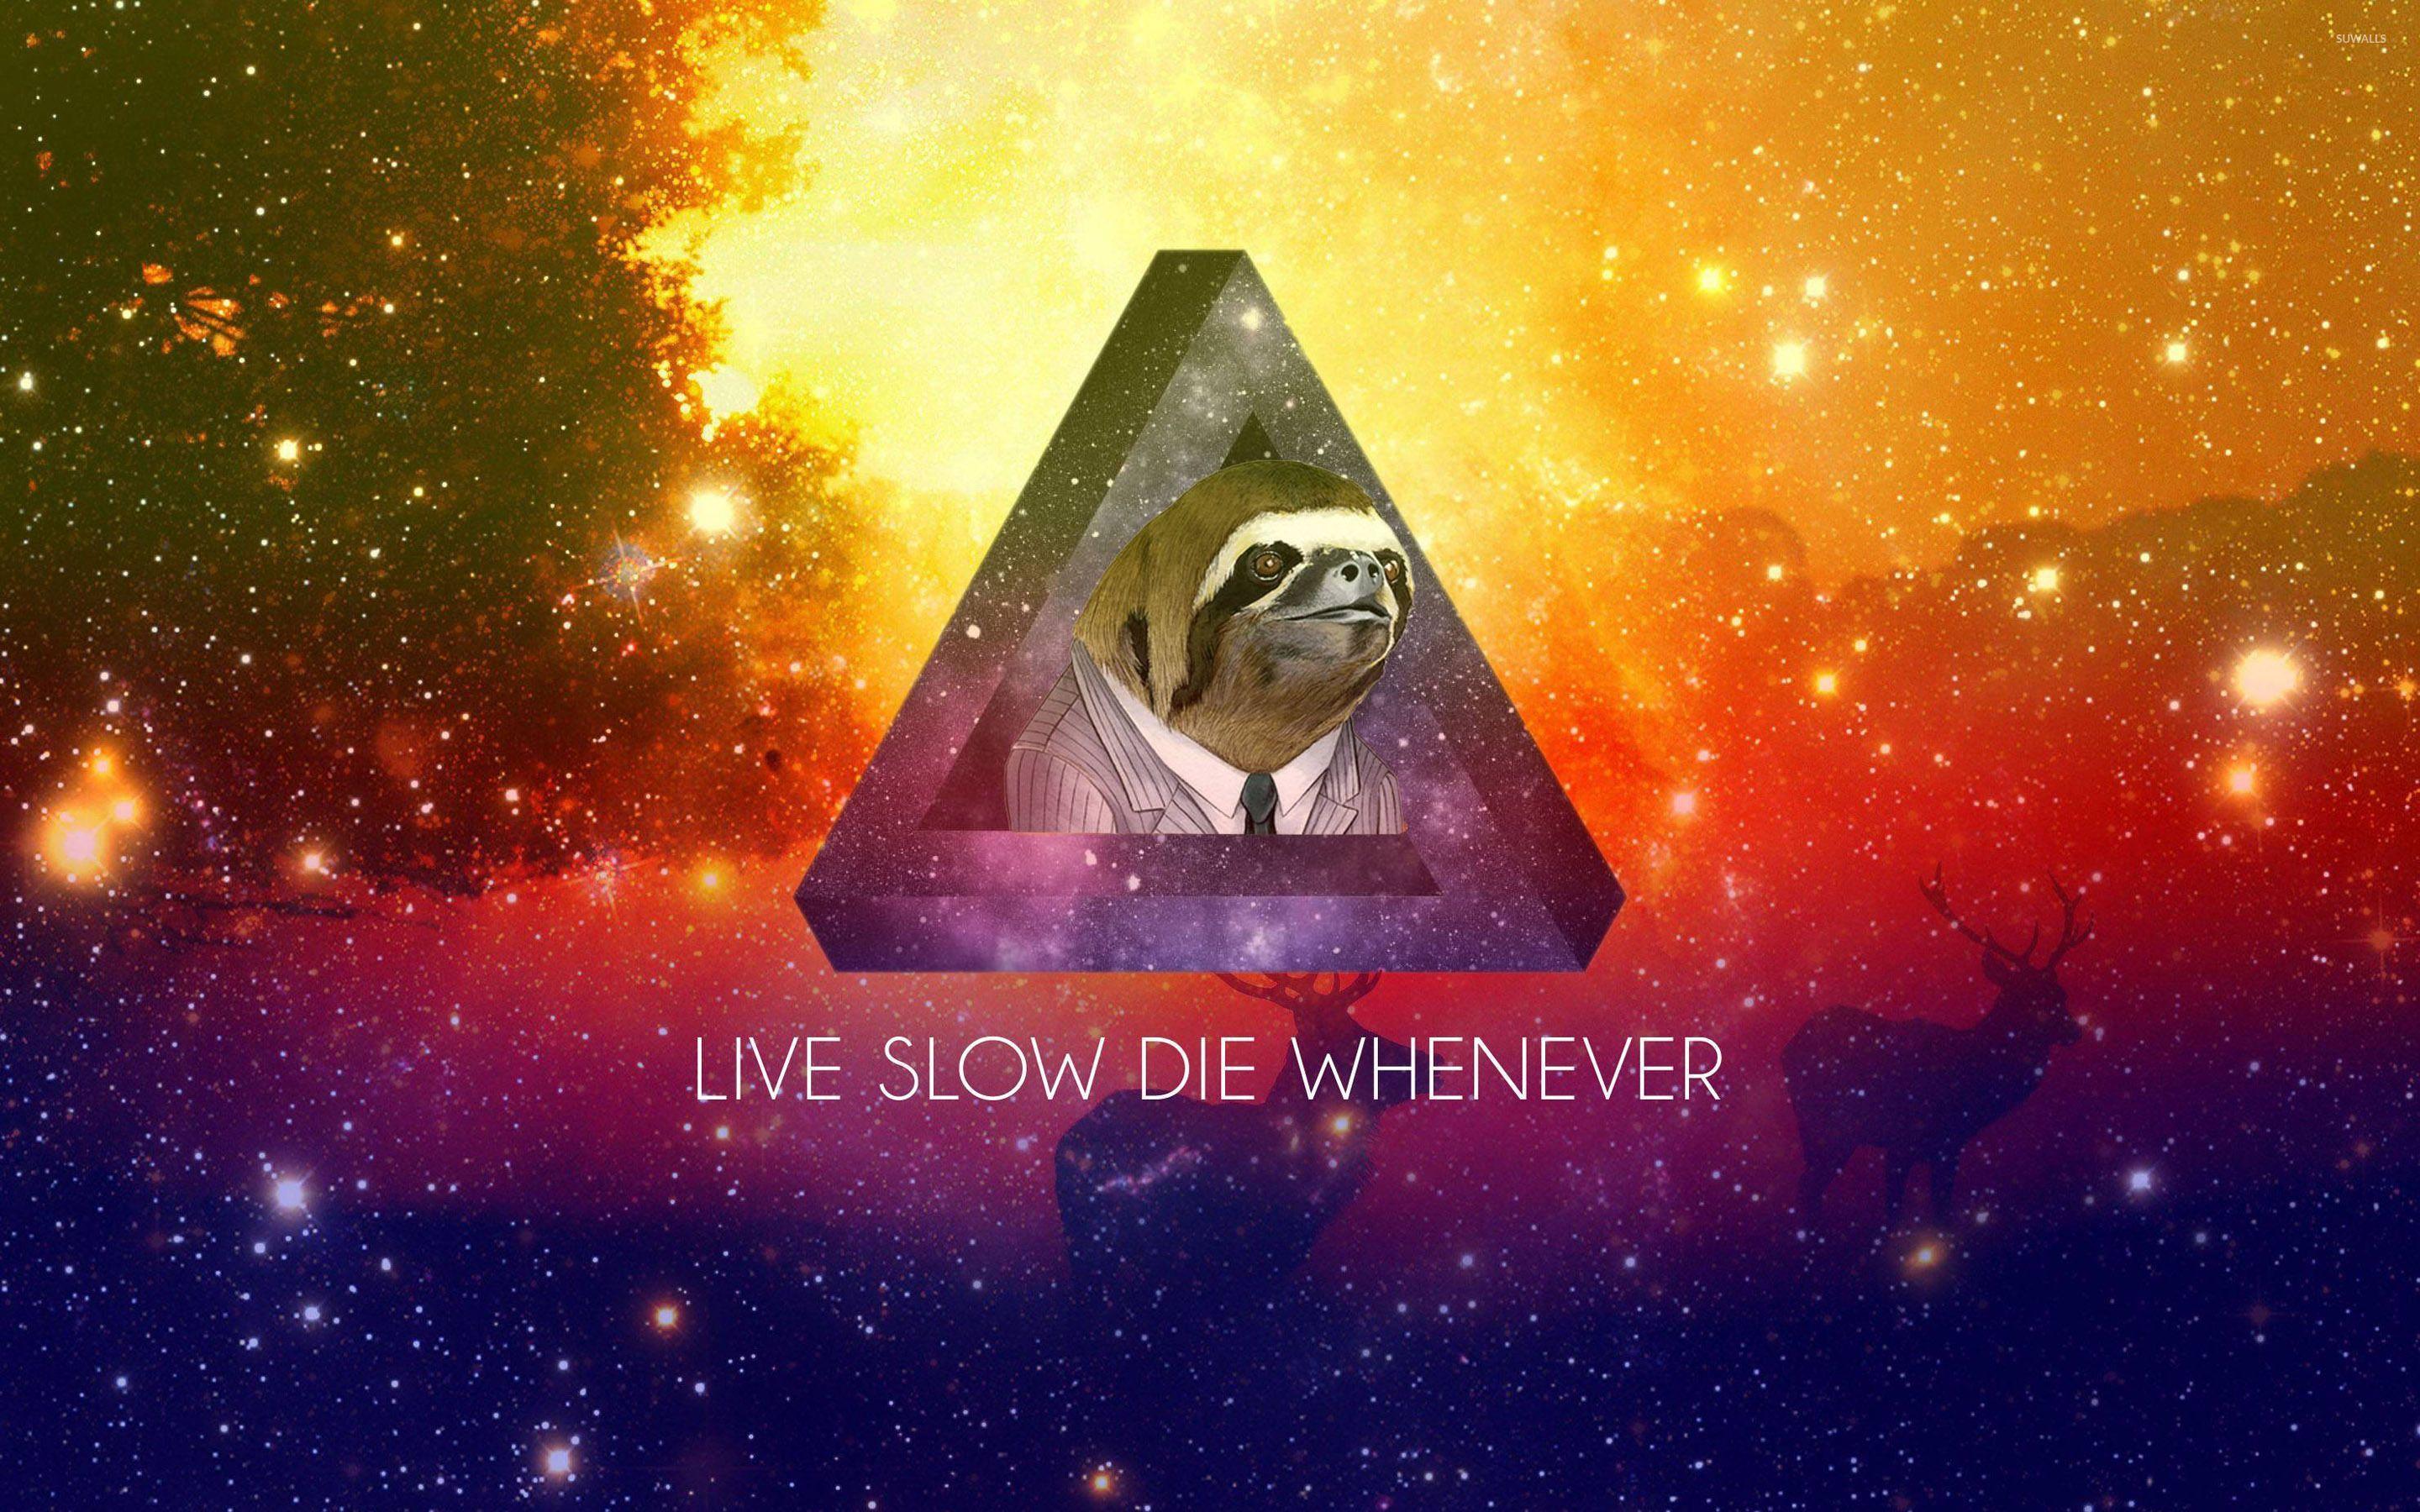 Live slow die whenever wallpaper .suwalls.com